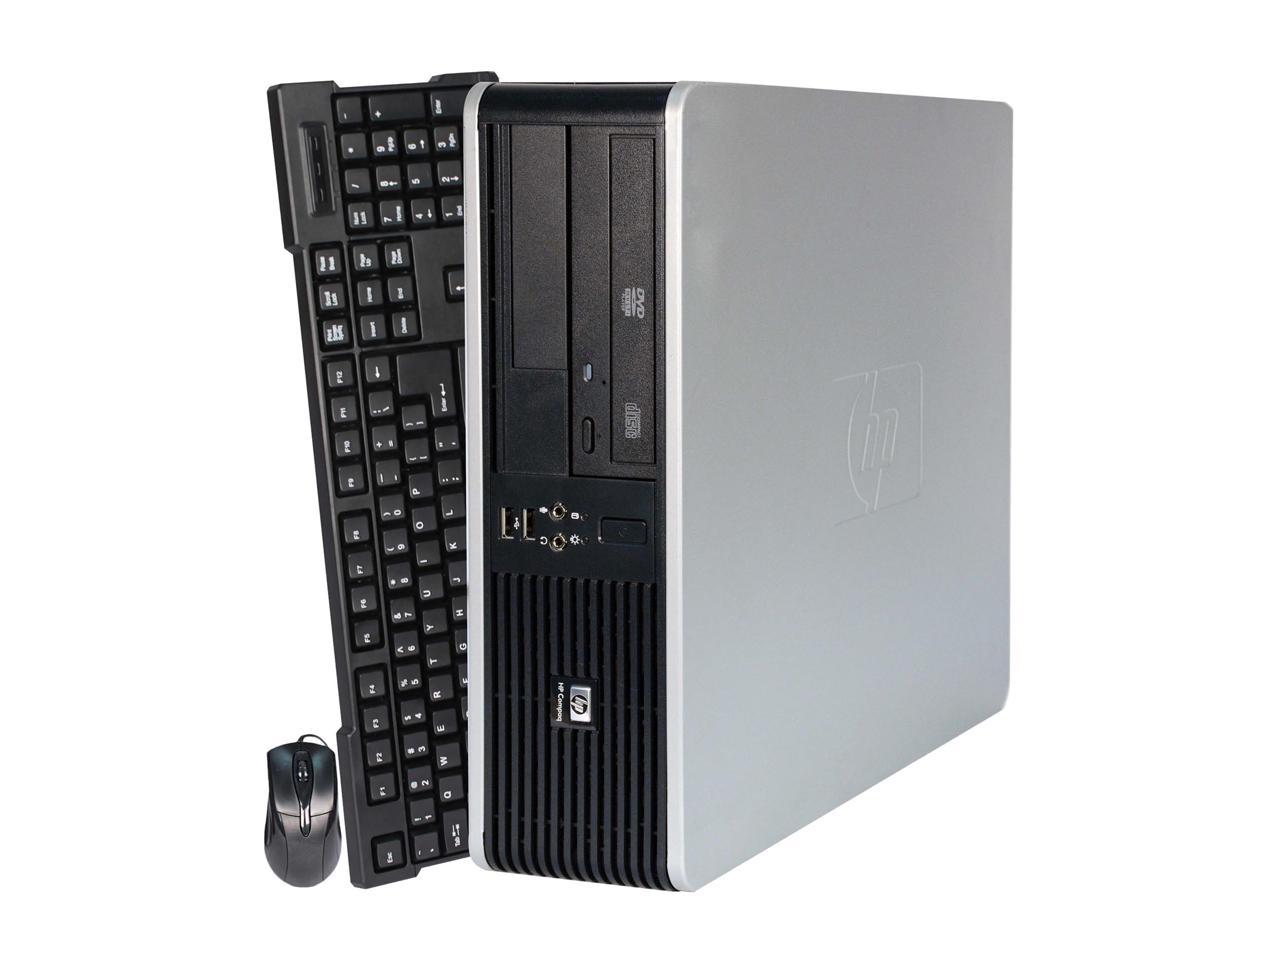 HP Desktop Computer RP5800 Intel Core i5 2nd Gen 2400 (3.10 GHz) 4 GB DDR3 320 GB HDD Intel HD Graphics 2000 Windows 10 Pro Multi-Language, English / Spanish